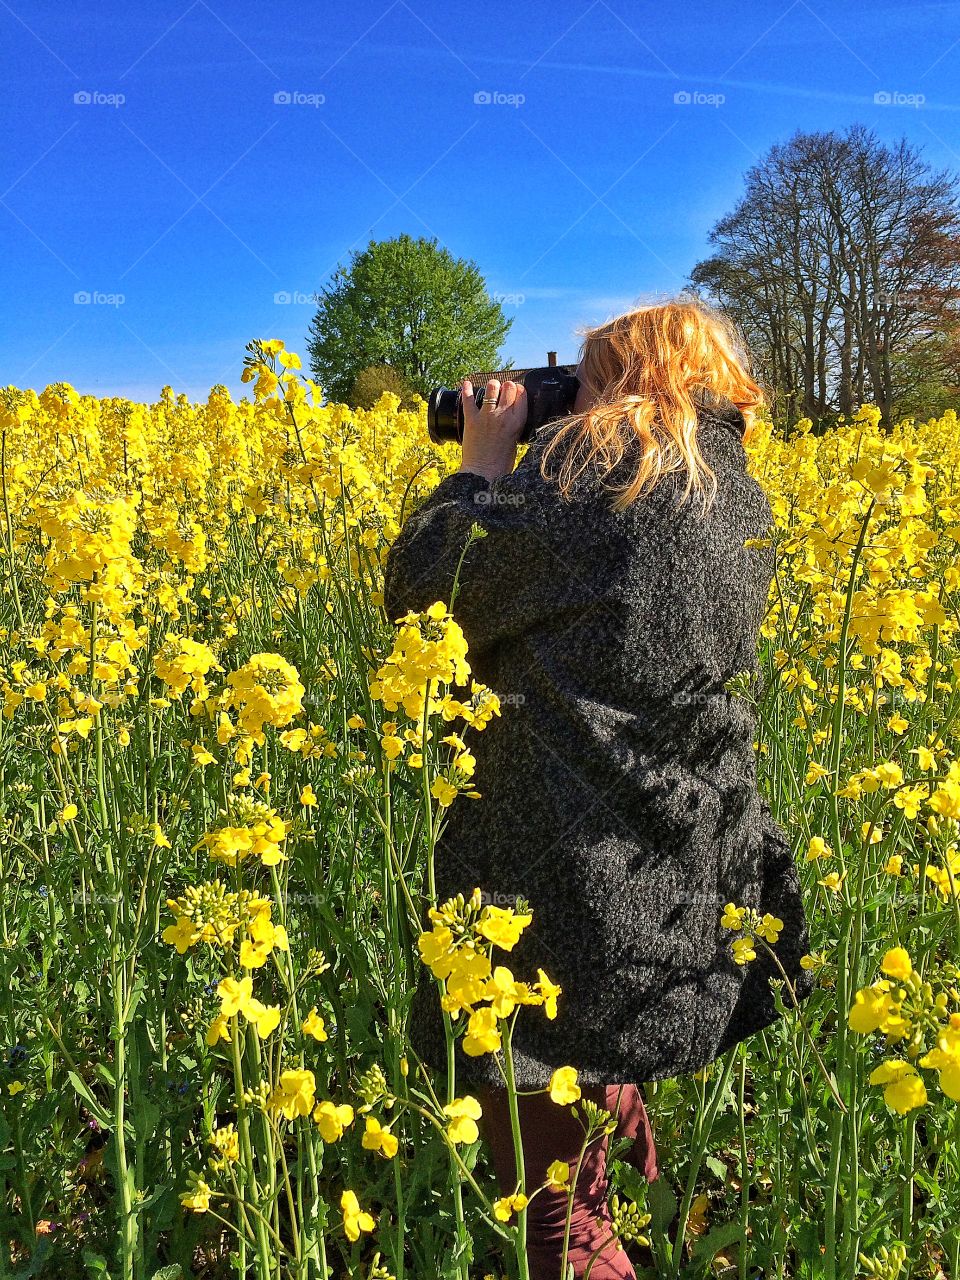 Capturing yellow